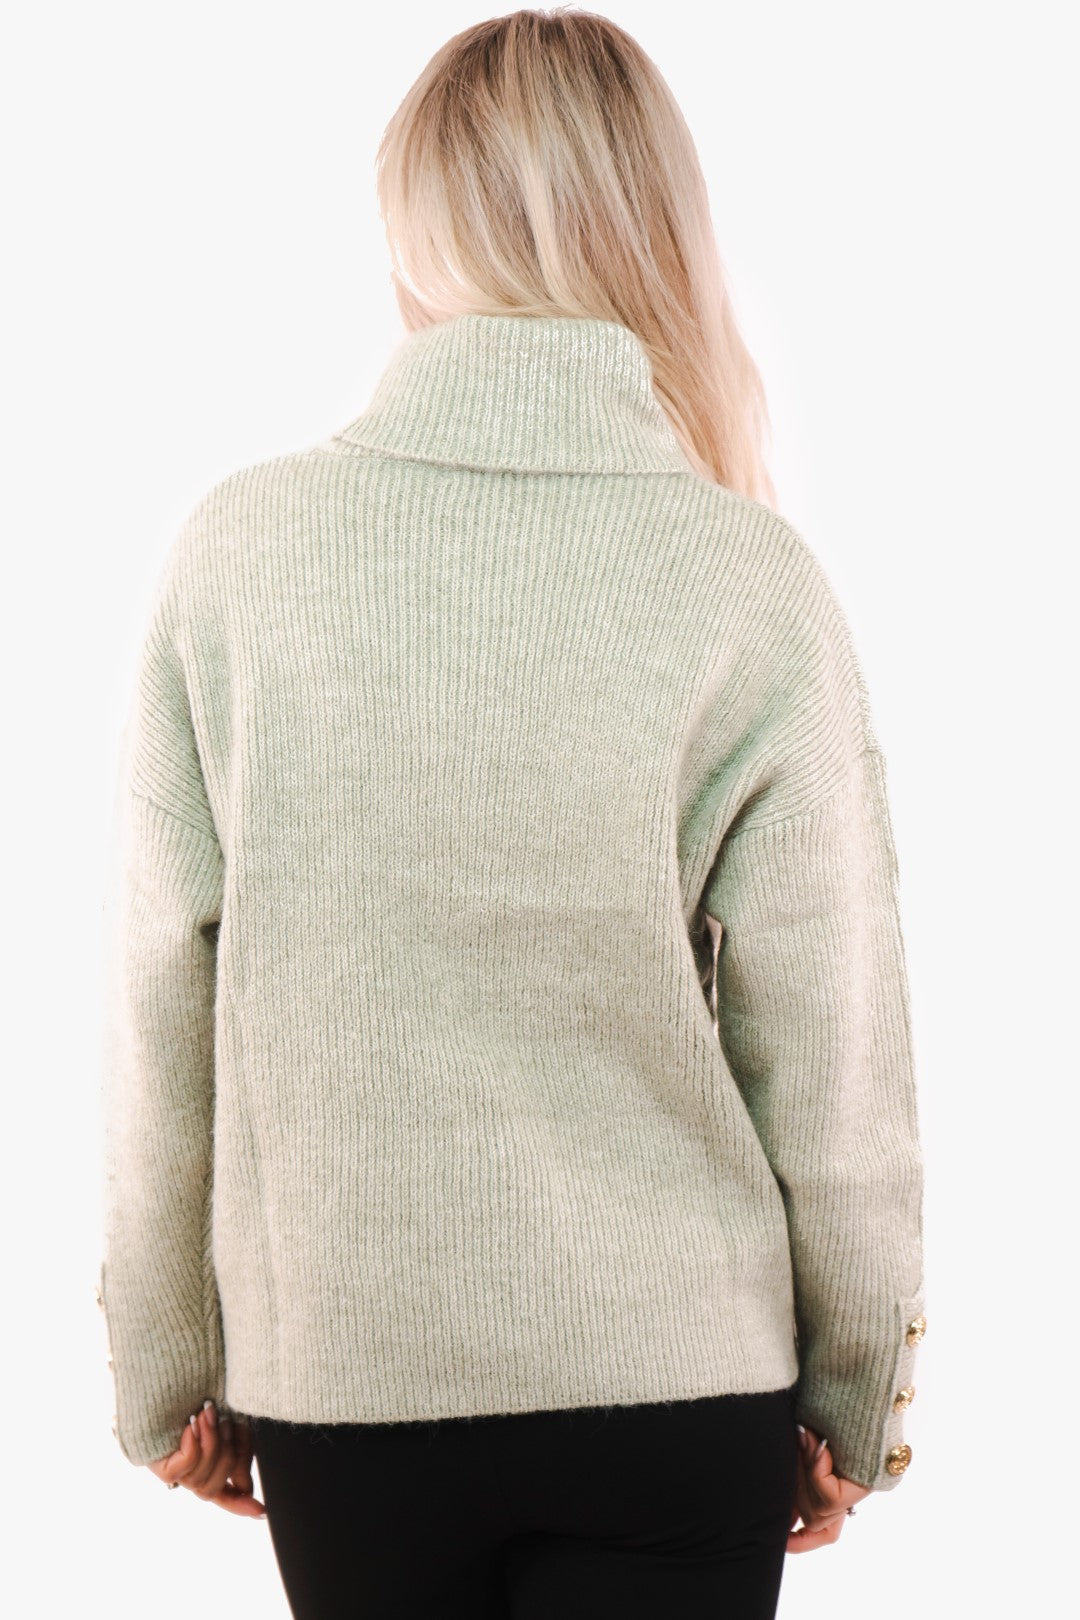 Green Esqualo sweater